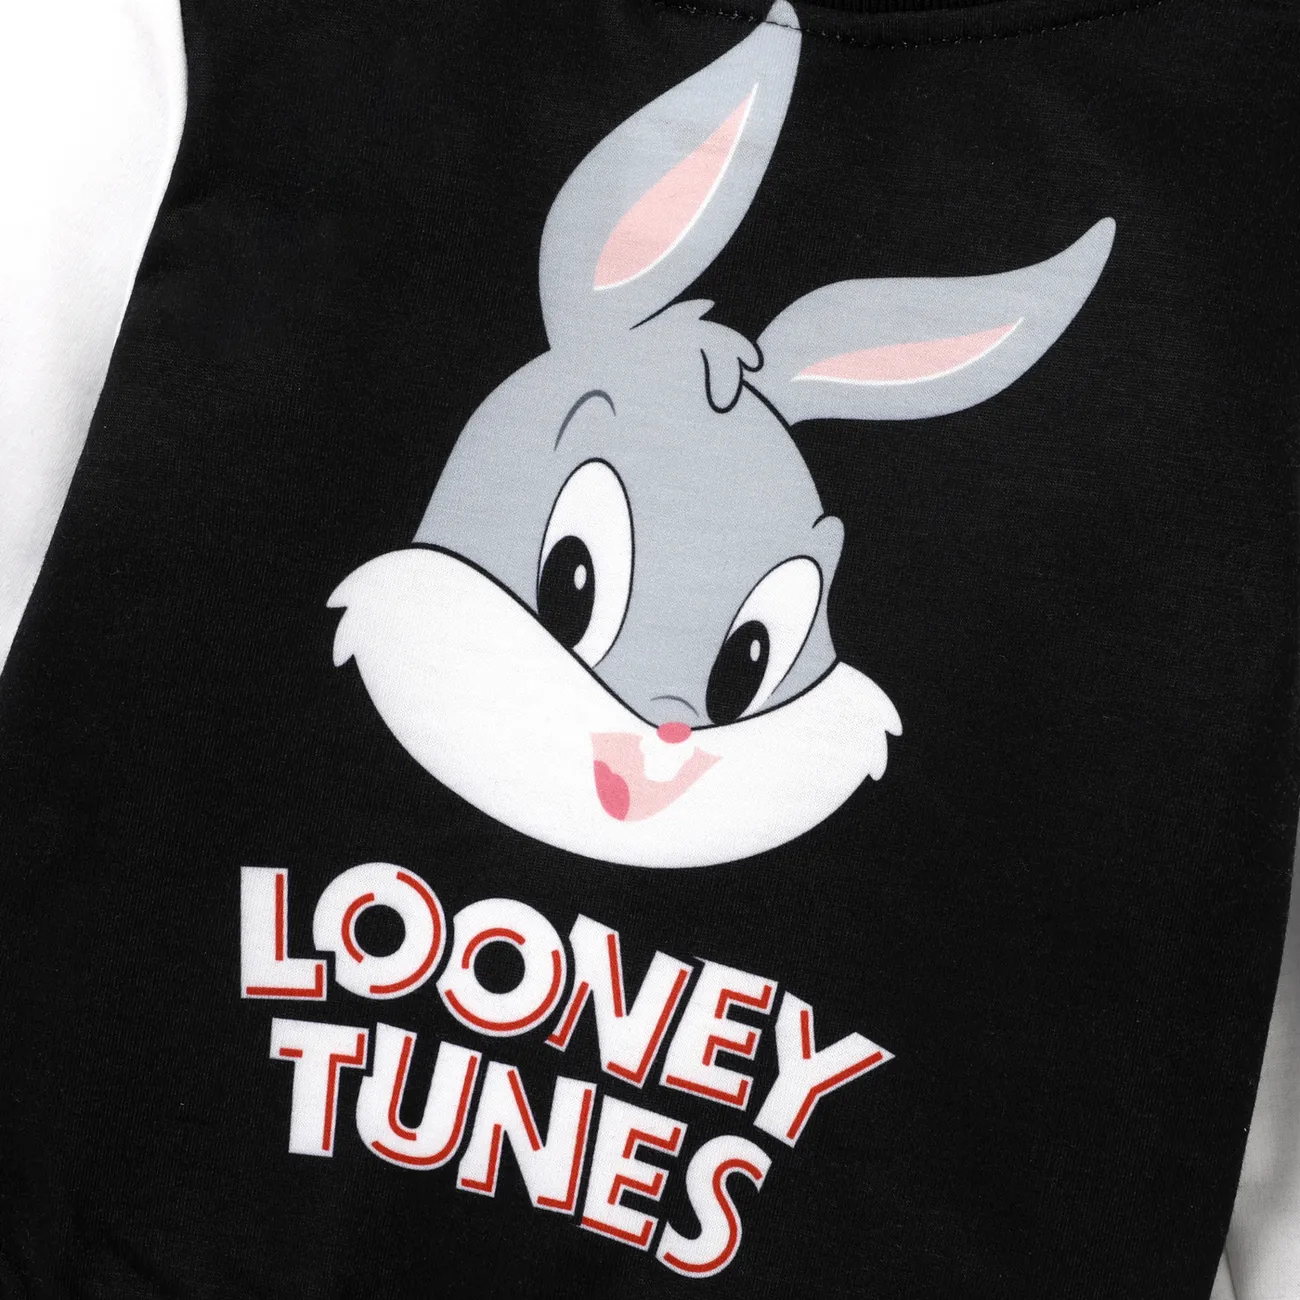 Looney Tunes Baby Boy/Girl Cartoon Animal Print Long-sleeve Jacket Black big image 1